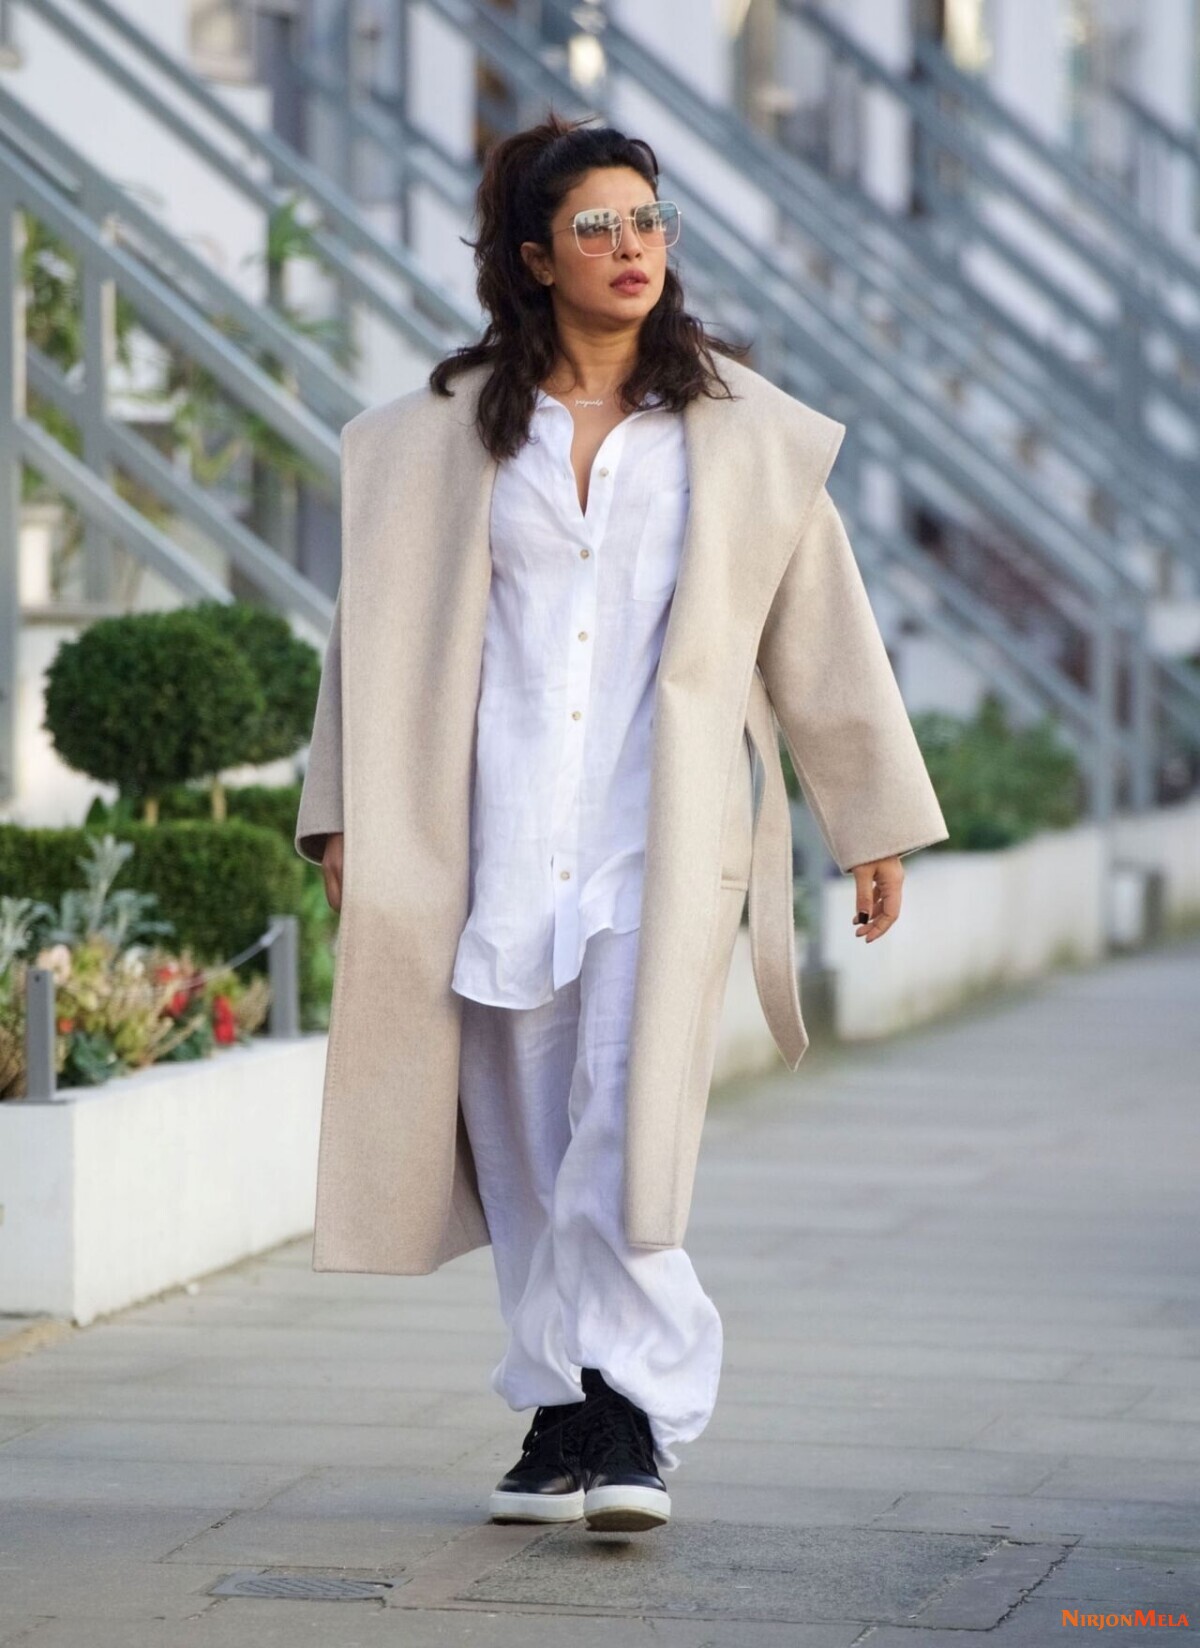 priyanka-chopra-in-comfy-outfit-london-02-28-2021-12.jpg